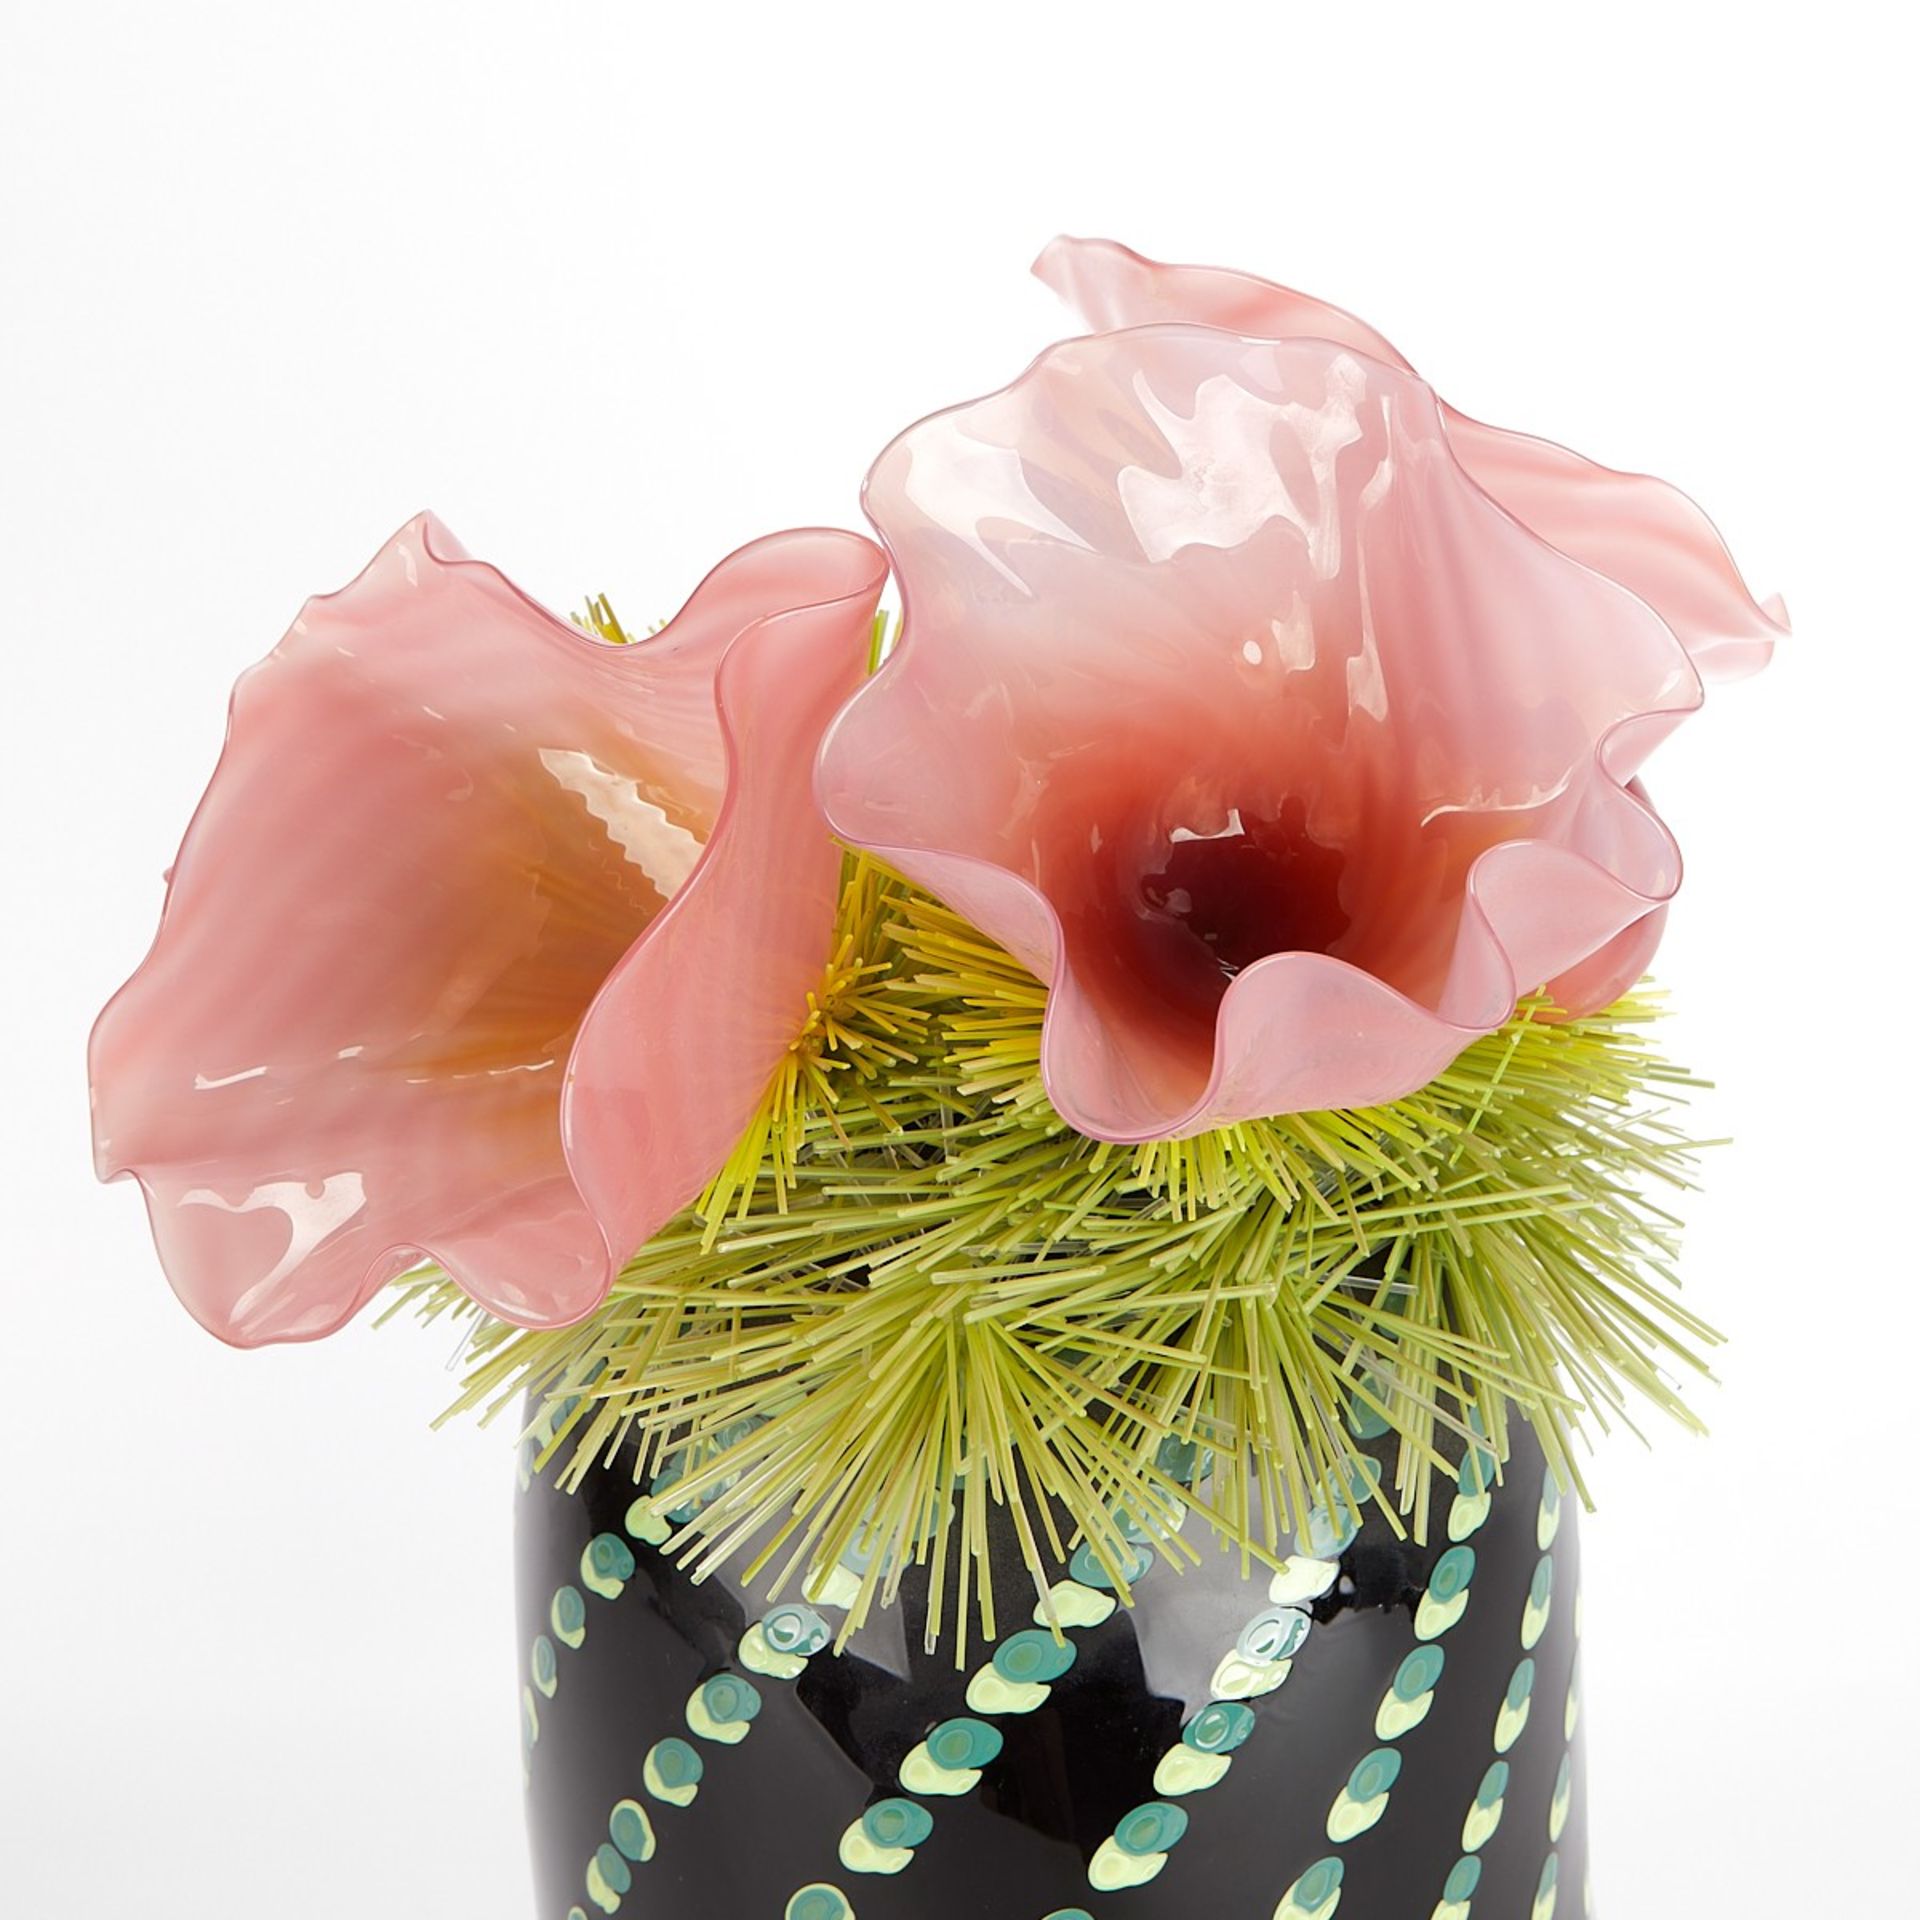 Flo Perkins "Chicago's Cactus" Glass Sculpture - Image 7 of 11